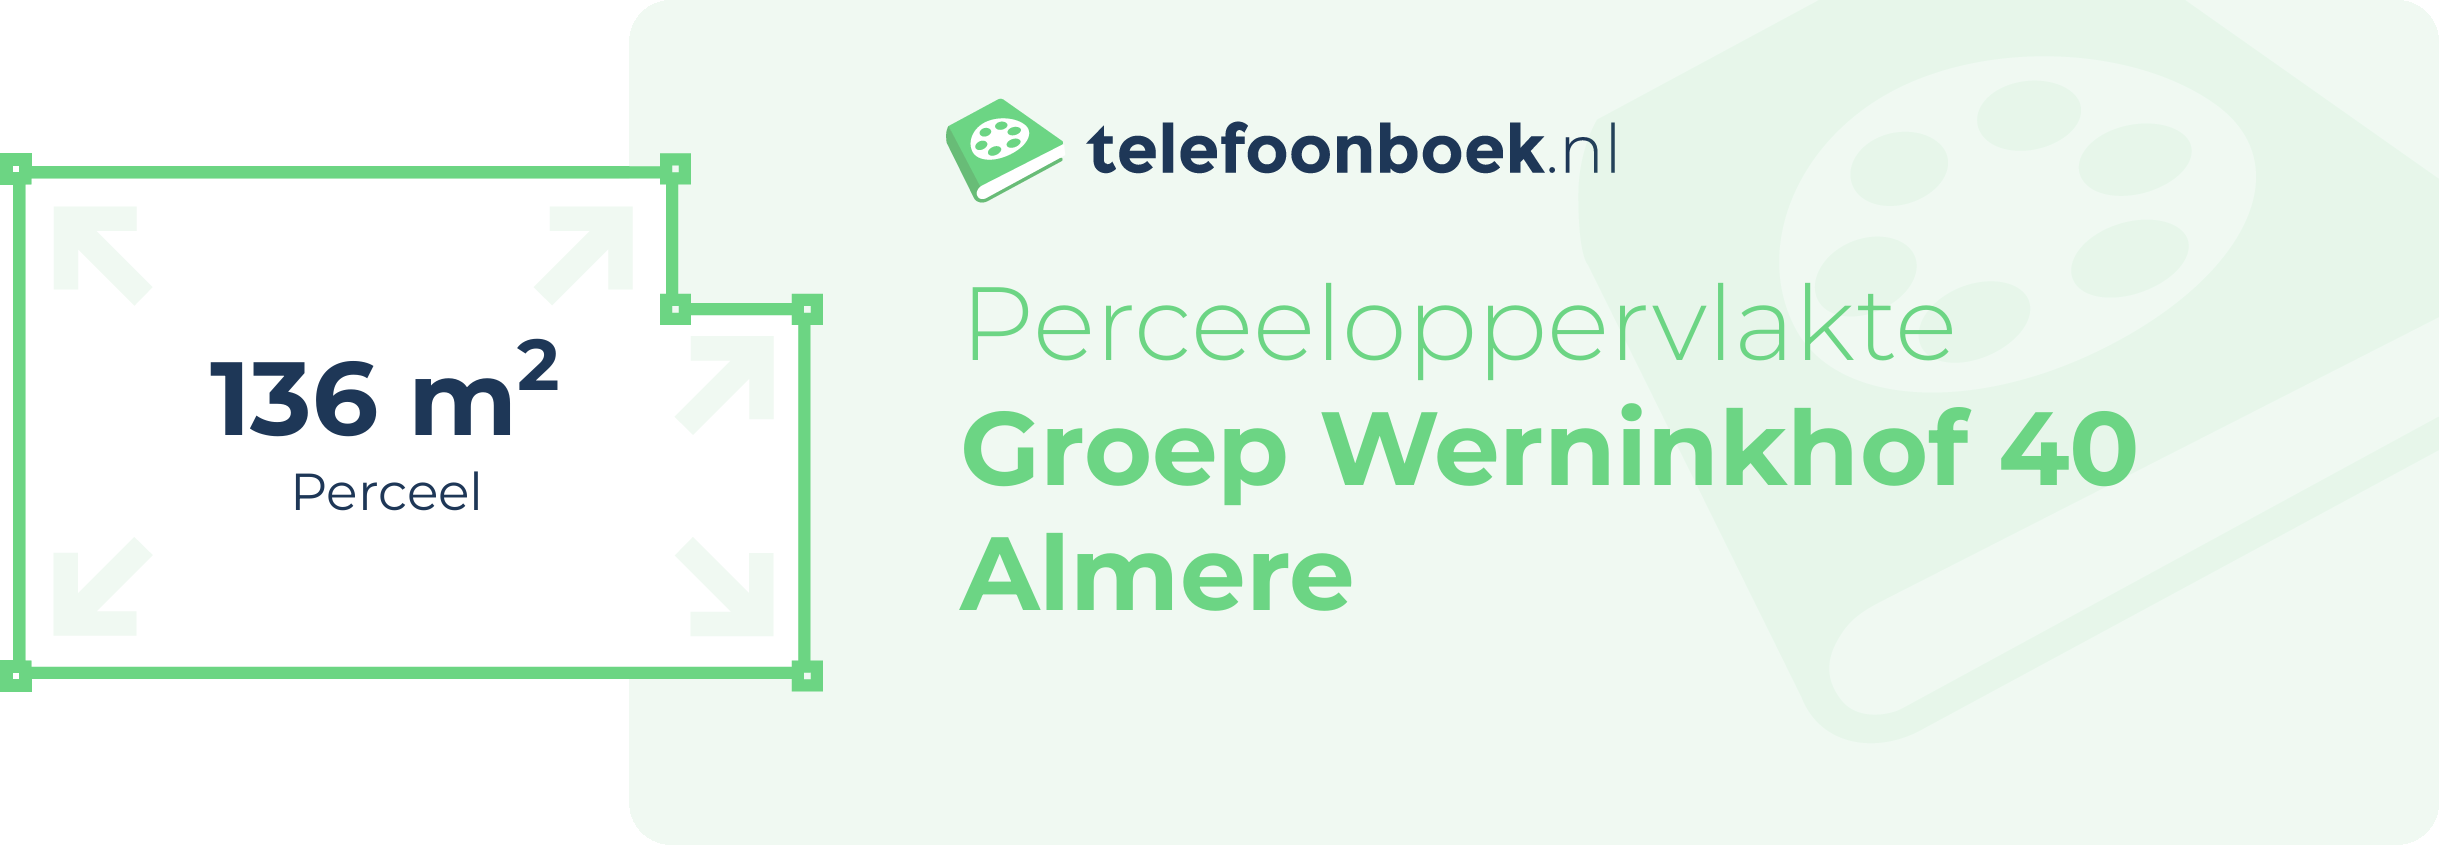 Perceeloppervlakte Groep Werninkhof 40 Almere